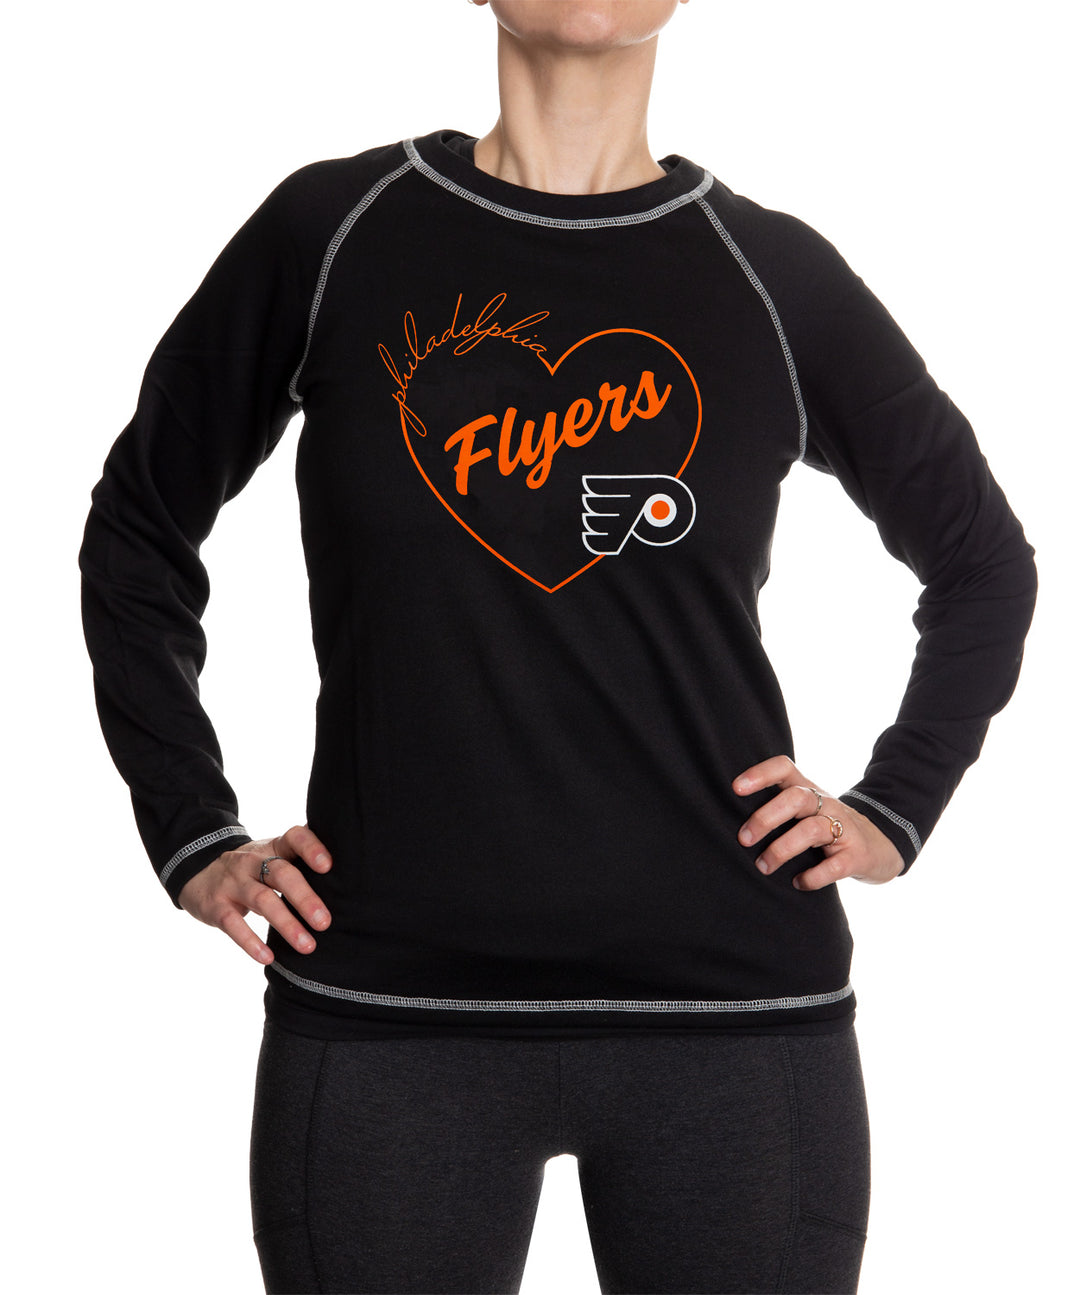 Philadelphia Flyers Heart Logo Long Sleeve Shirt for Women in Black Front View